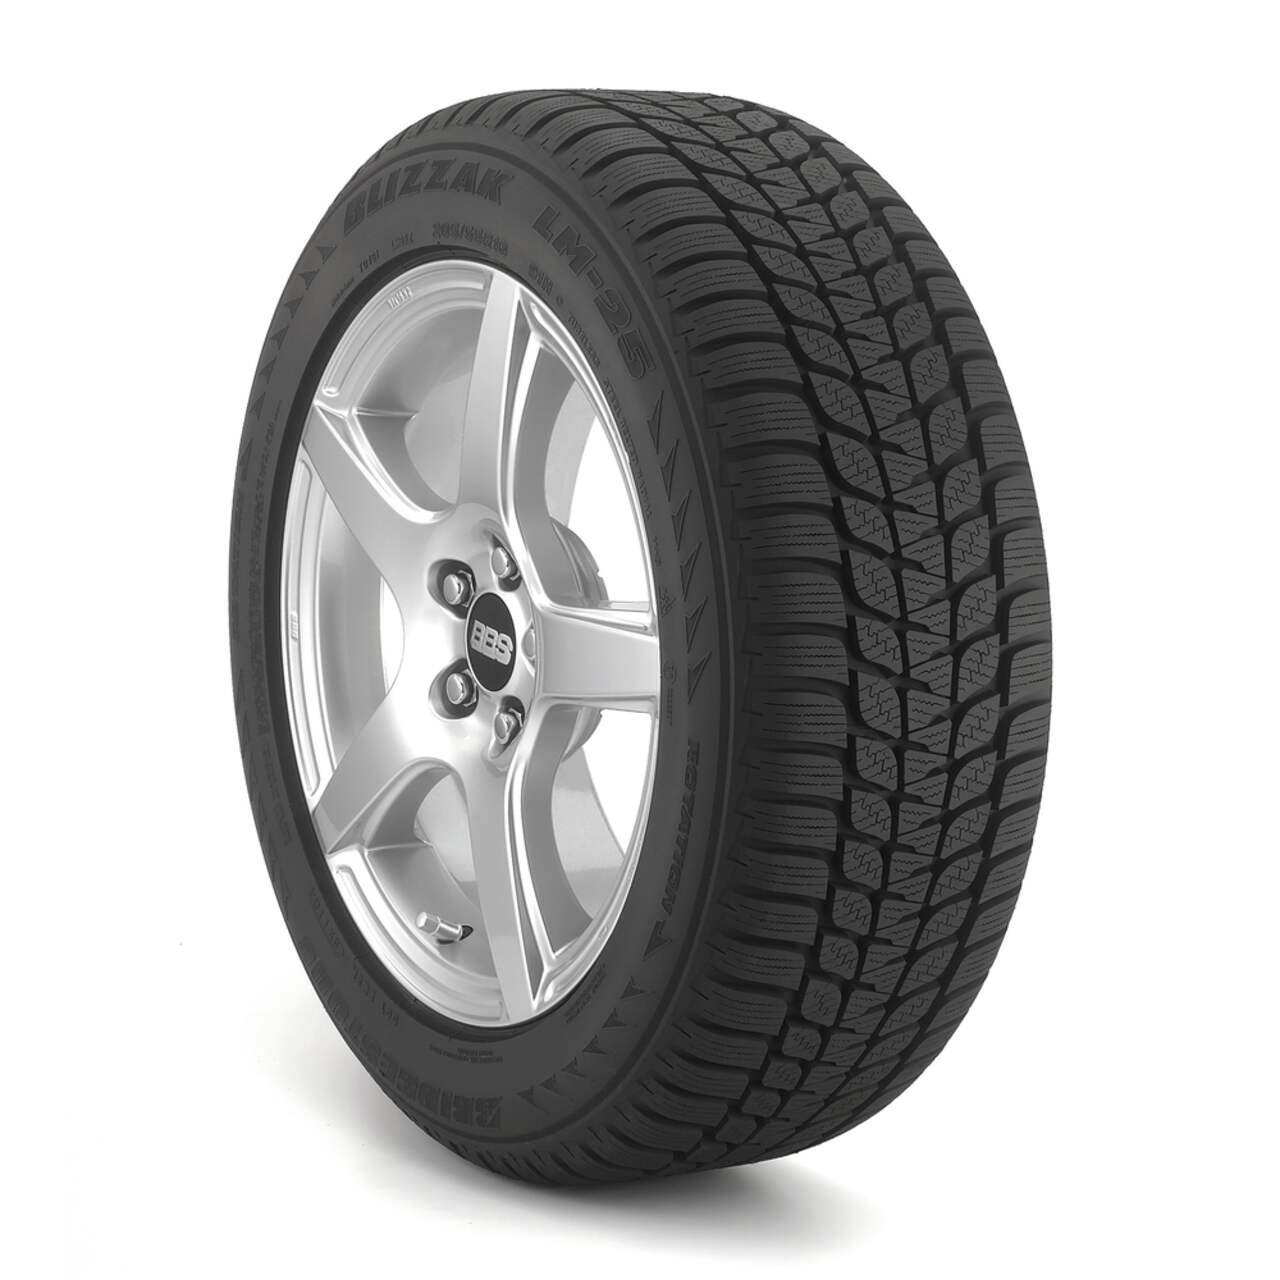 Bridgestone Blizzak LM-25-1 RFT Winter Tire For Truck & SUV